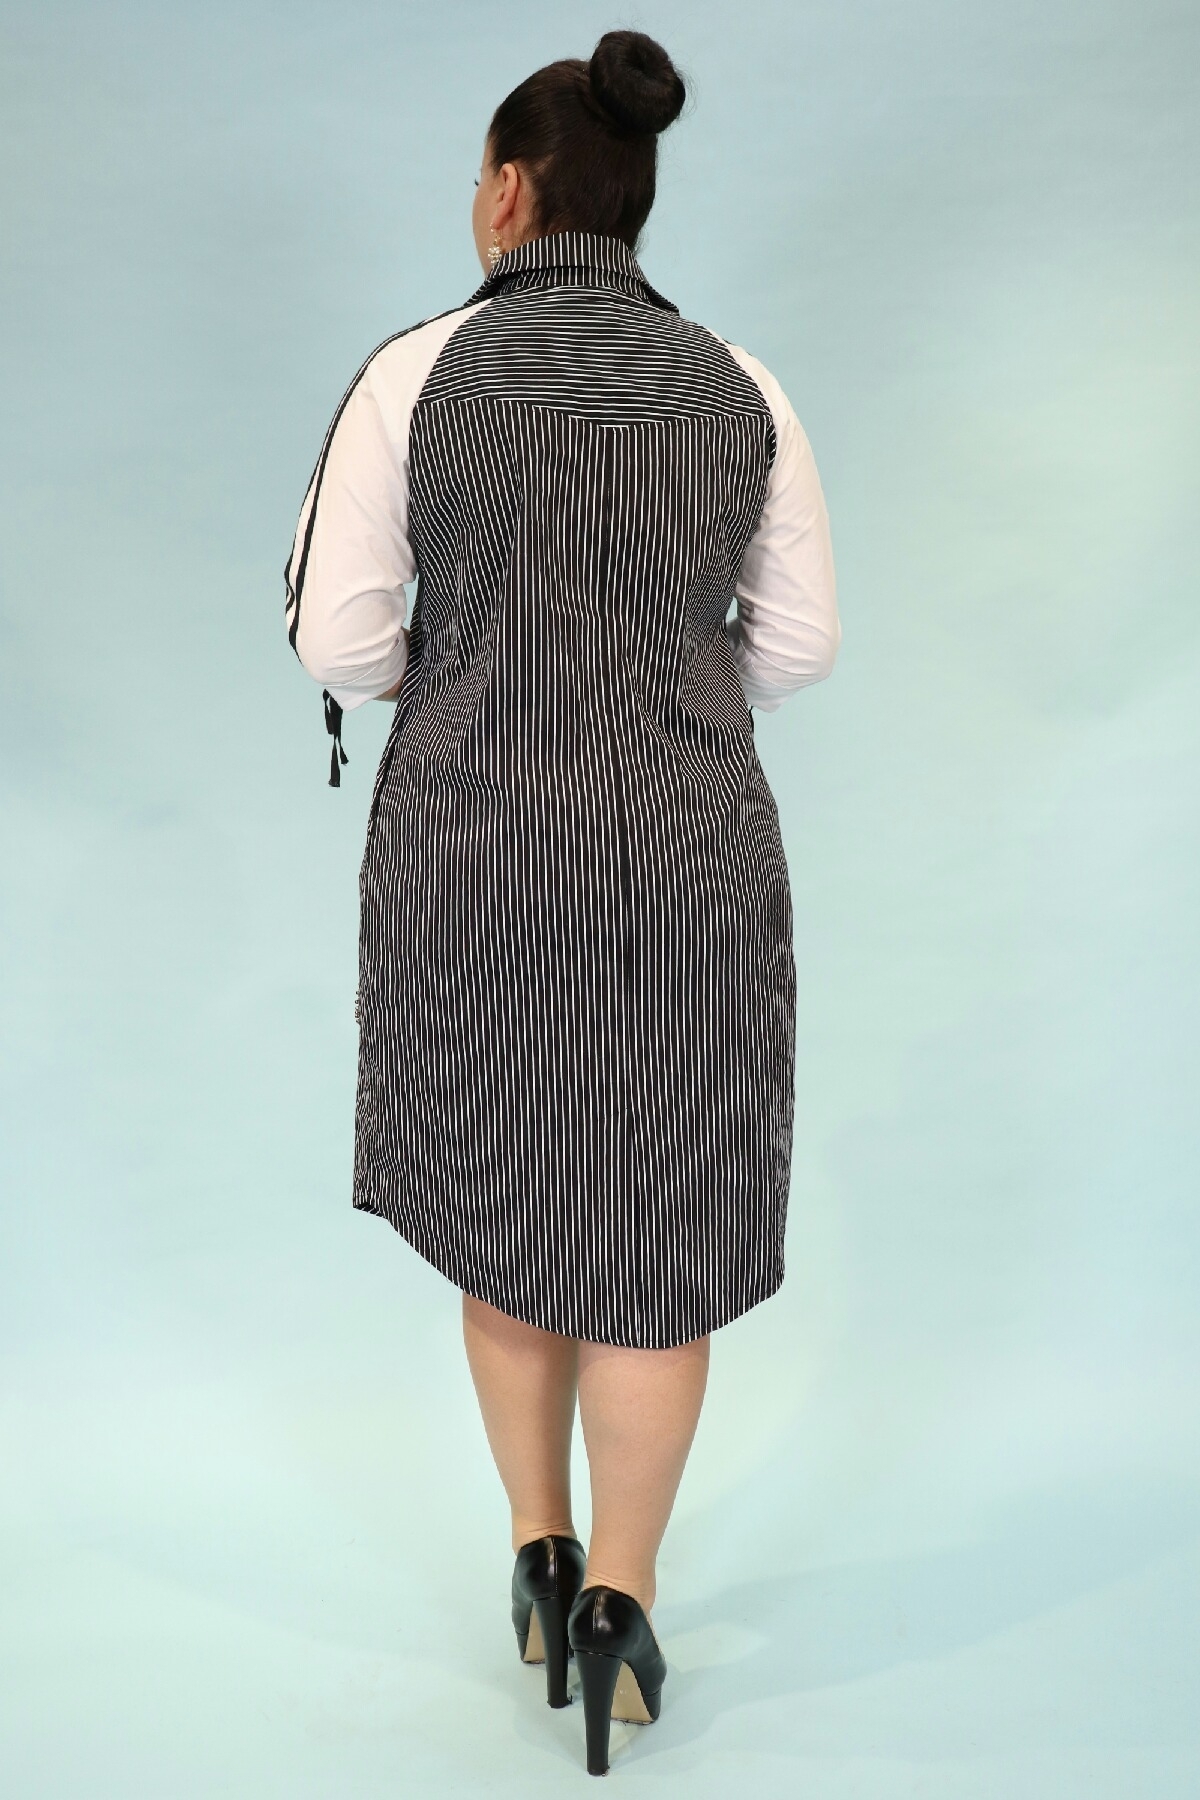 Striped, zipper  sport style dress with pockets